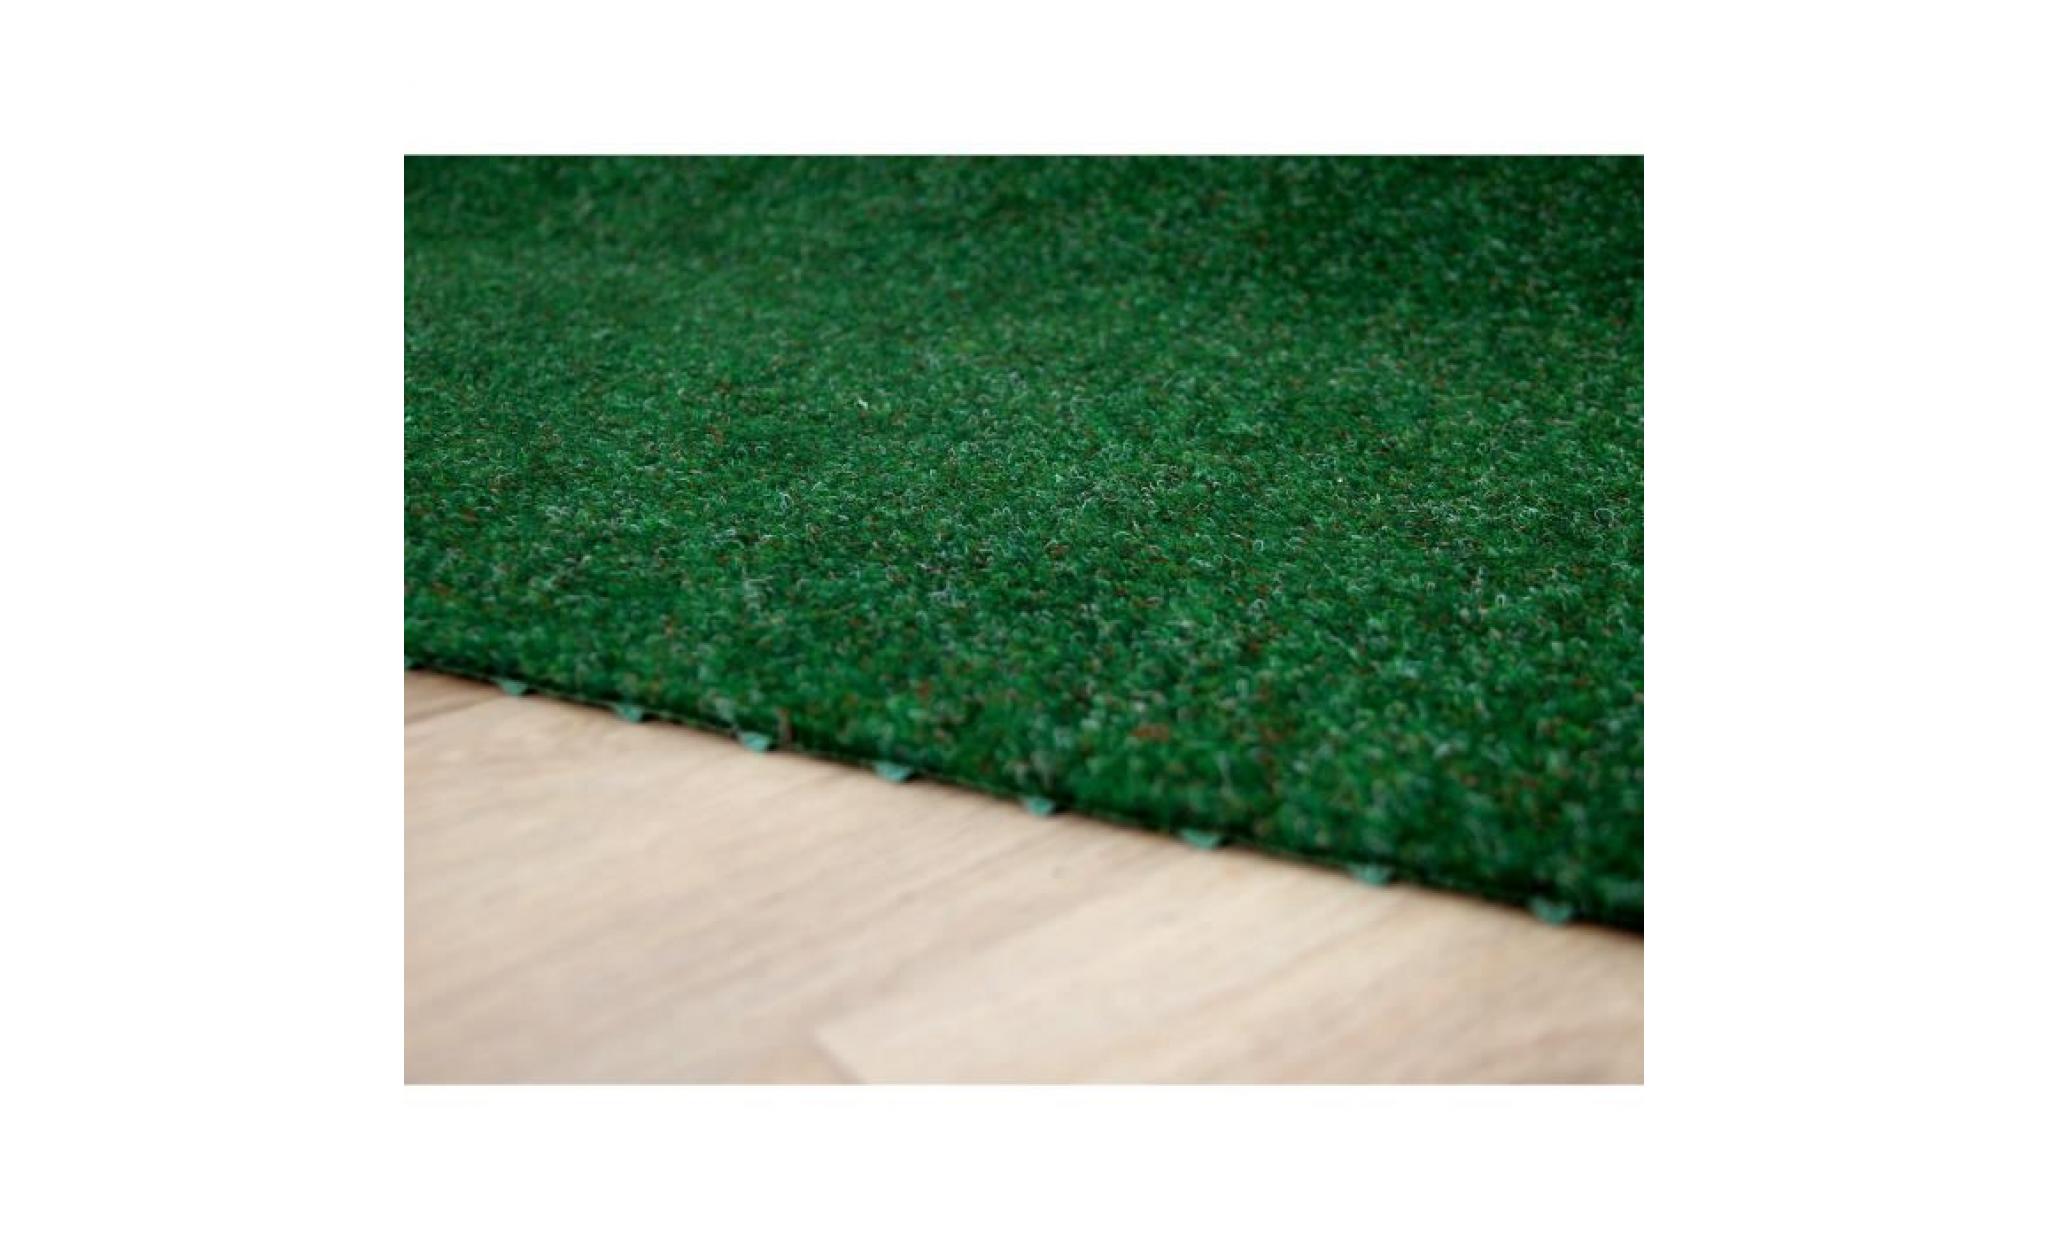 kingston   tapis type gazon artificiel – pour jardin, terrasse, balcon   anthracite [200x200 cm] pas cher